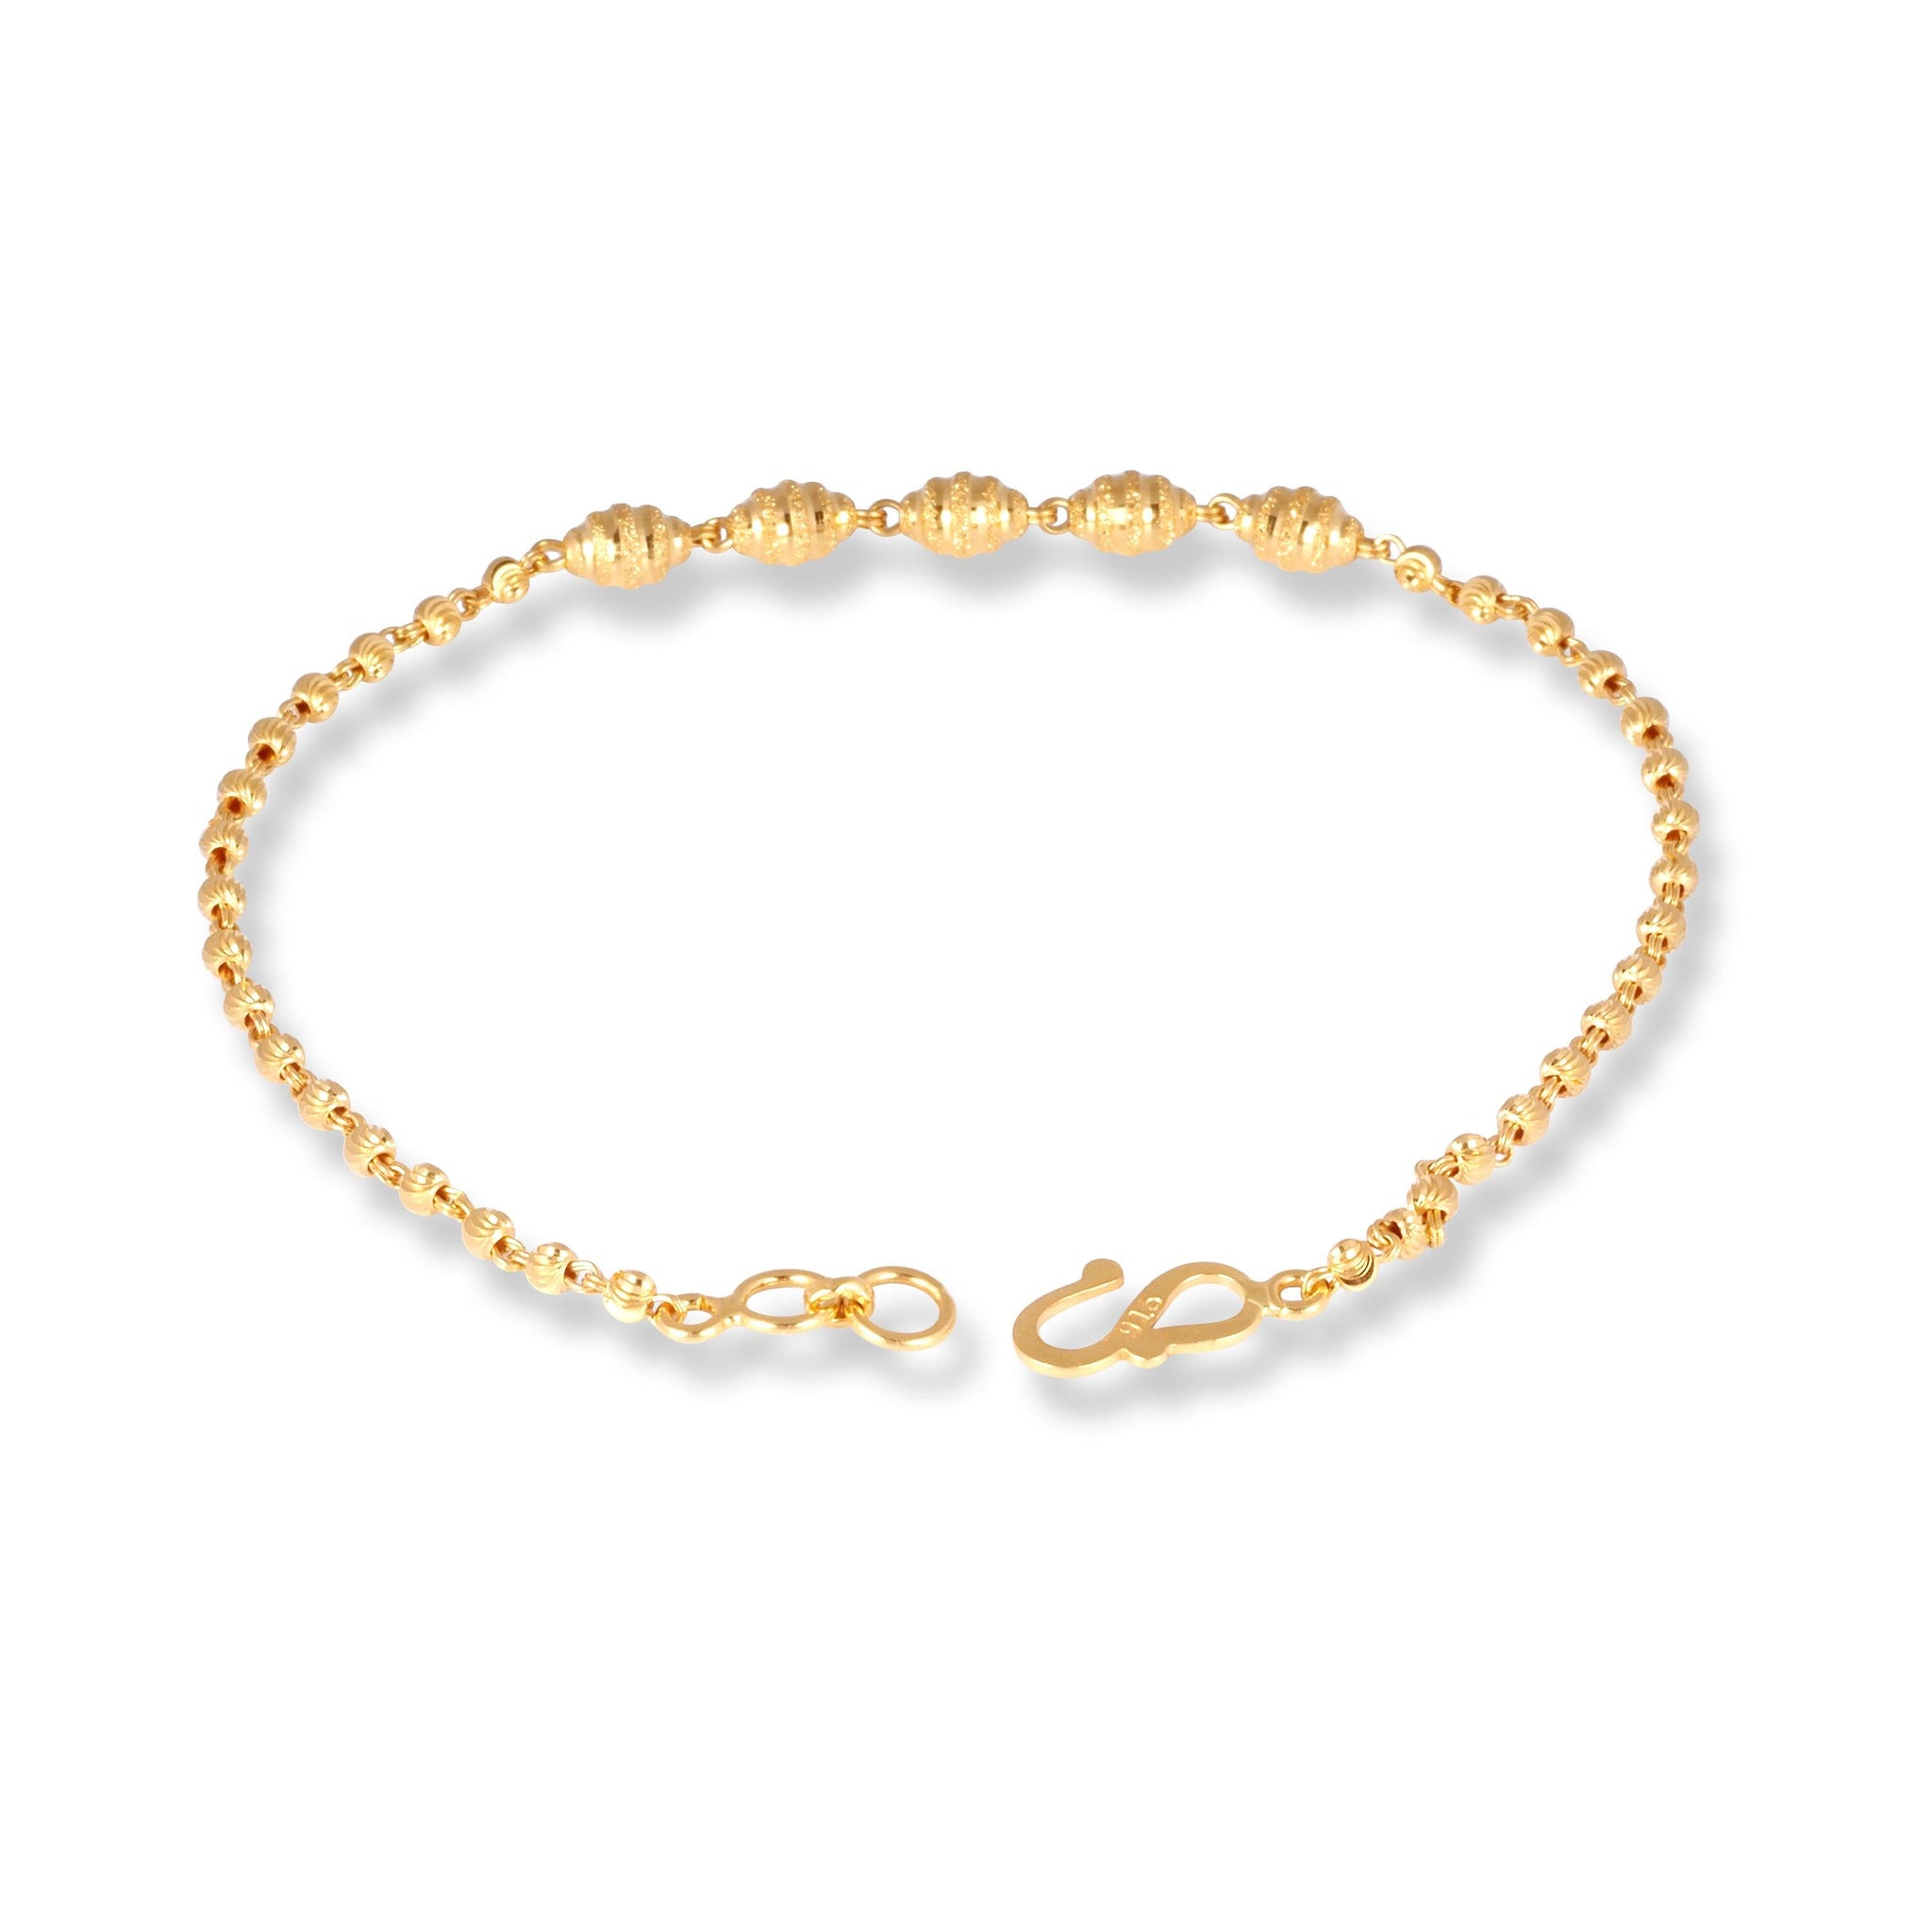 22ct Gold Ladies Five Diamond Cut Beads Bracelet with S Clasp LBR-7160